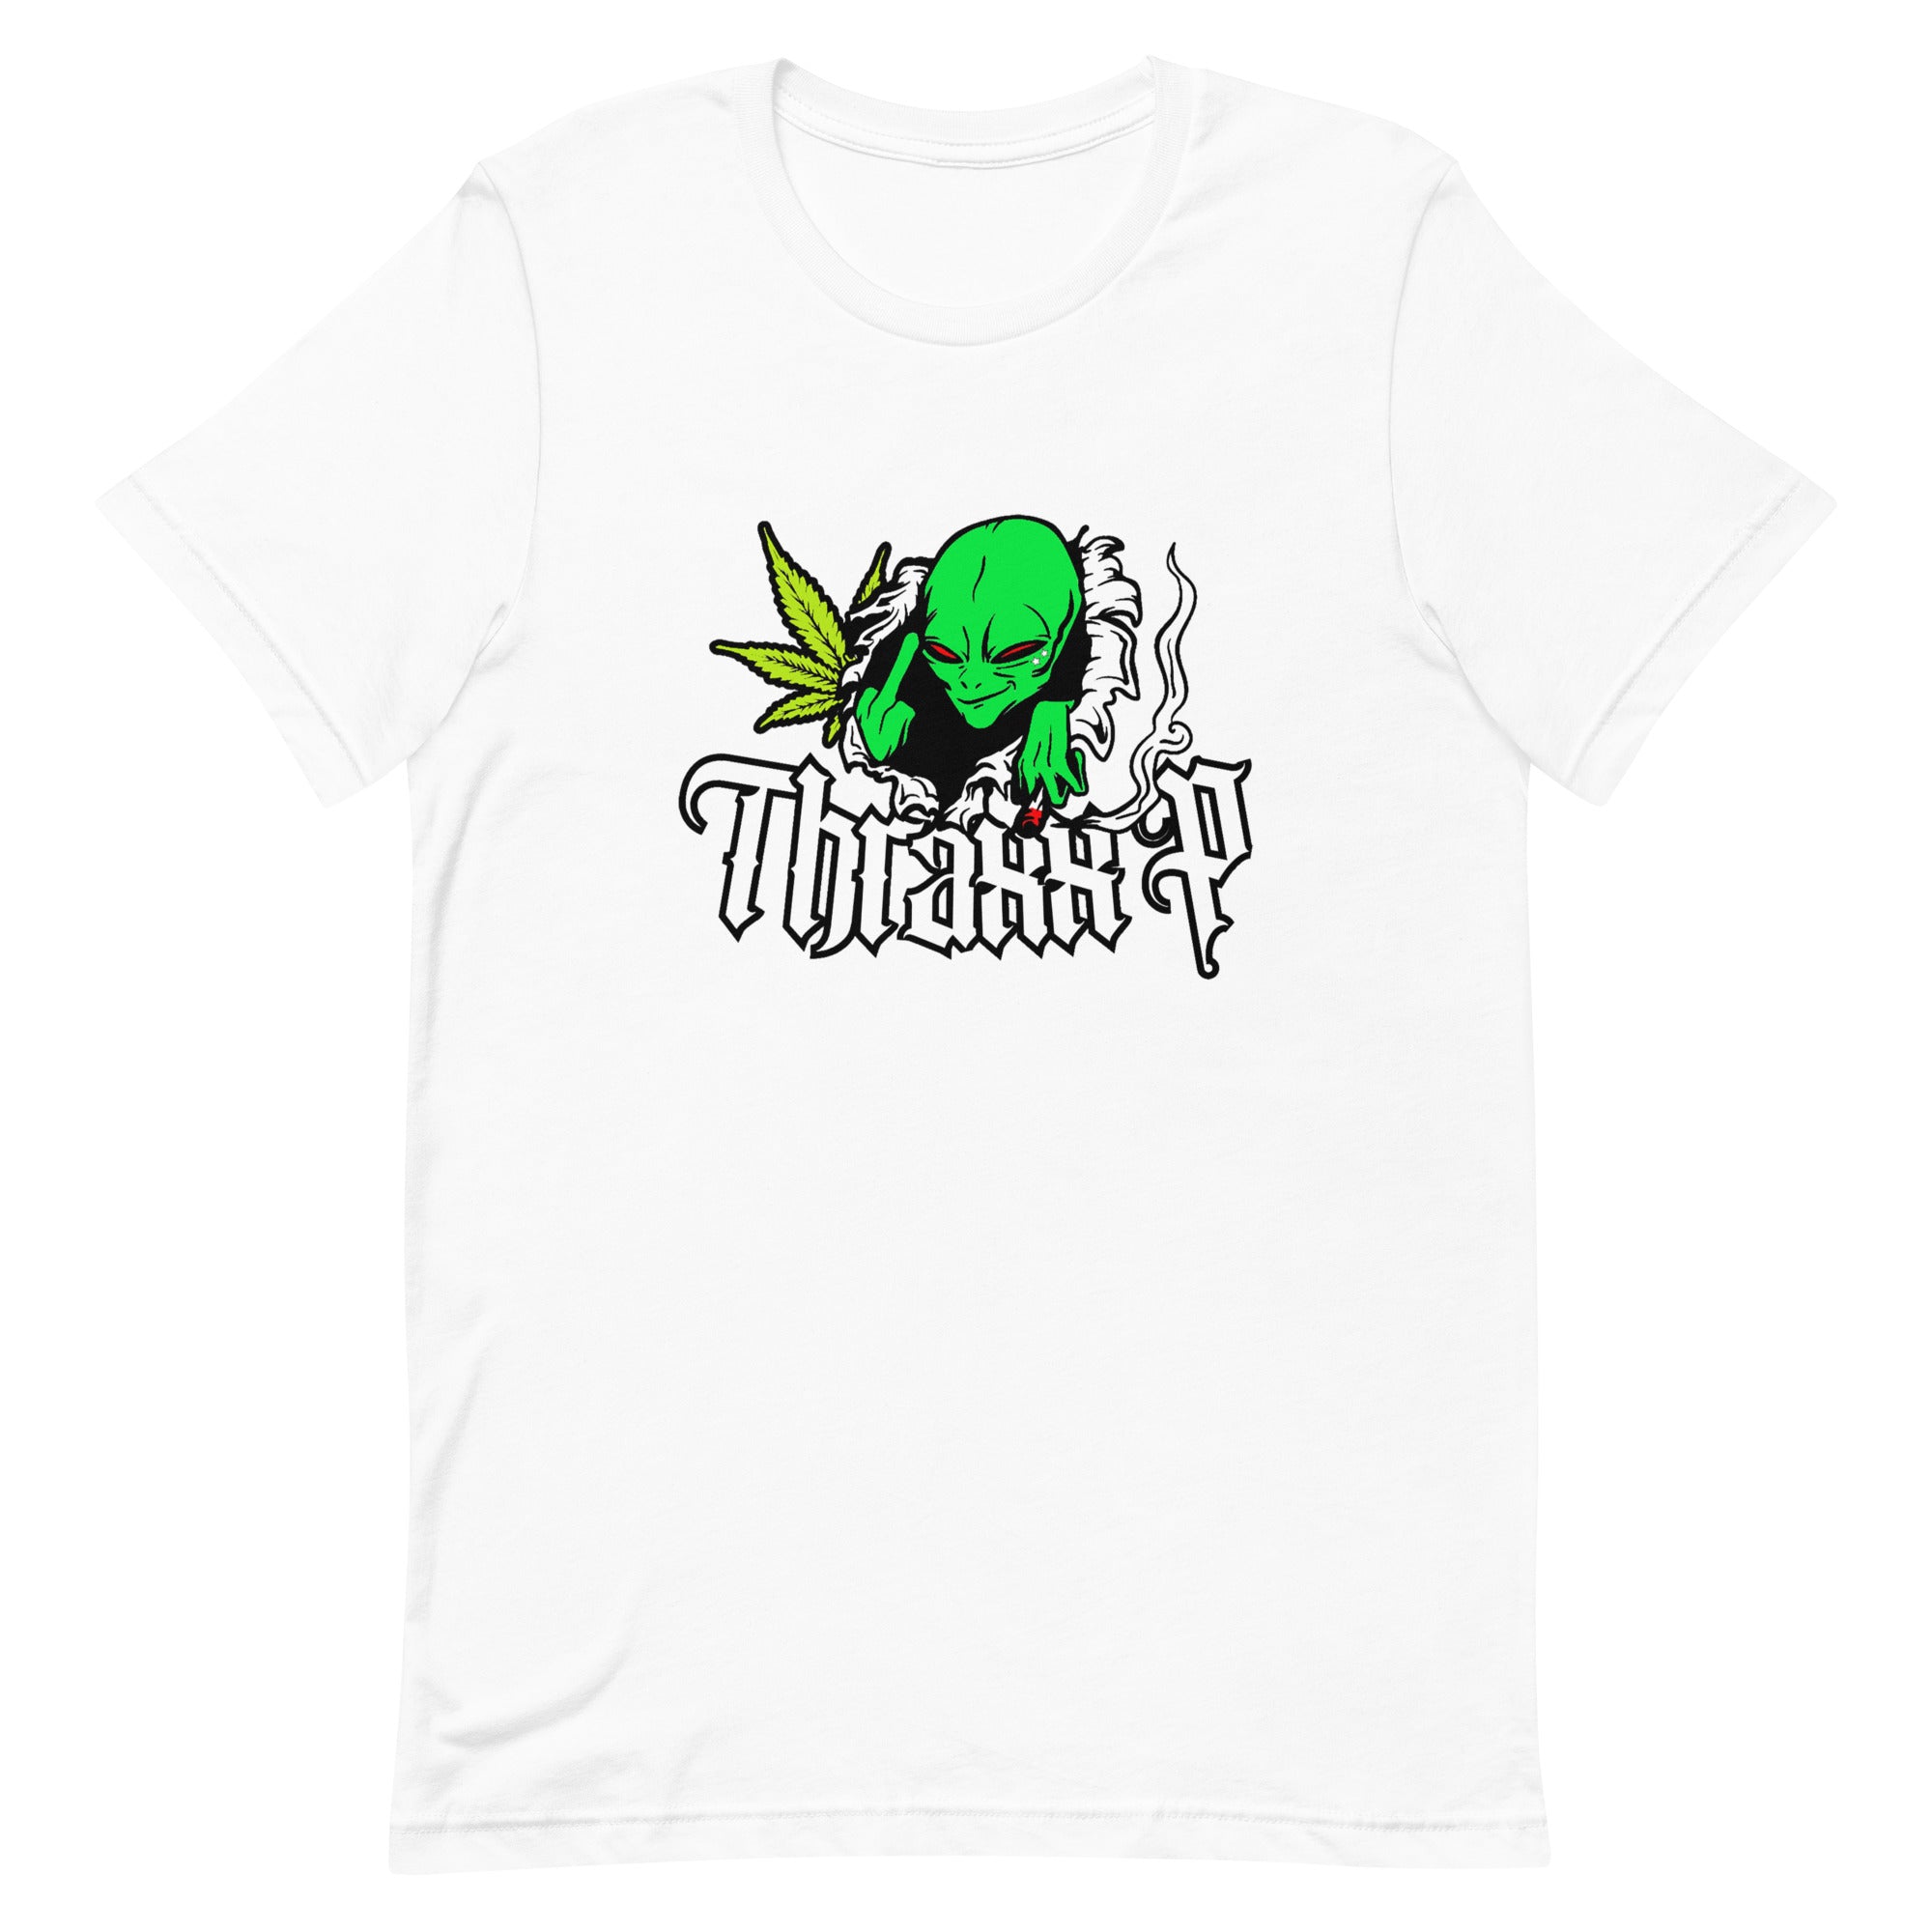 Thraxx P - Unisex t-shirt